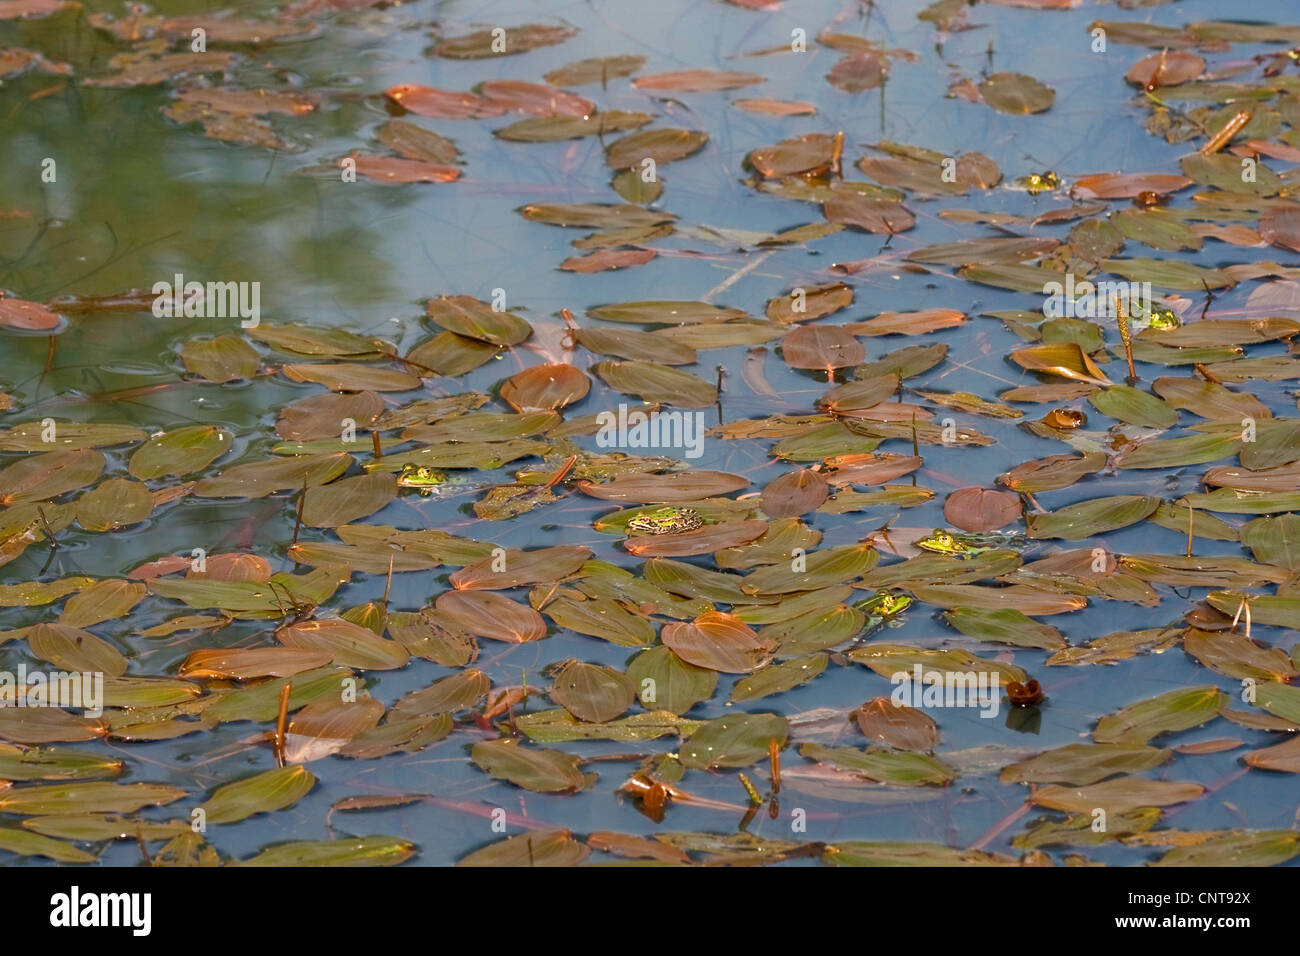 Piscina rana, poco waterfrog (Rana lessonae, Pelophylax lessonae), seduti su foglie di di latifoglie, lenticchia d'acqua Potamogeton natans, in Germania, in Renania Palatinato Foto Stock